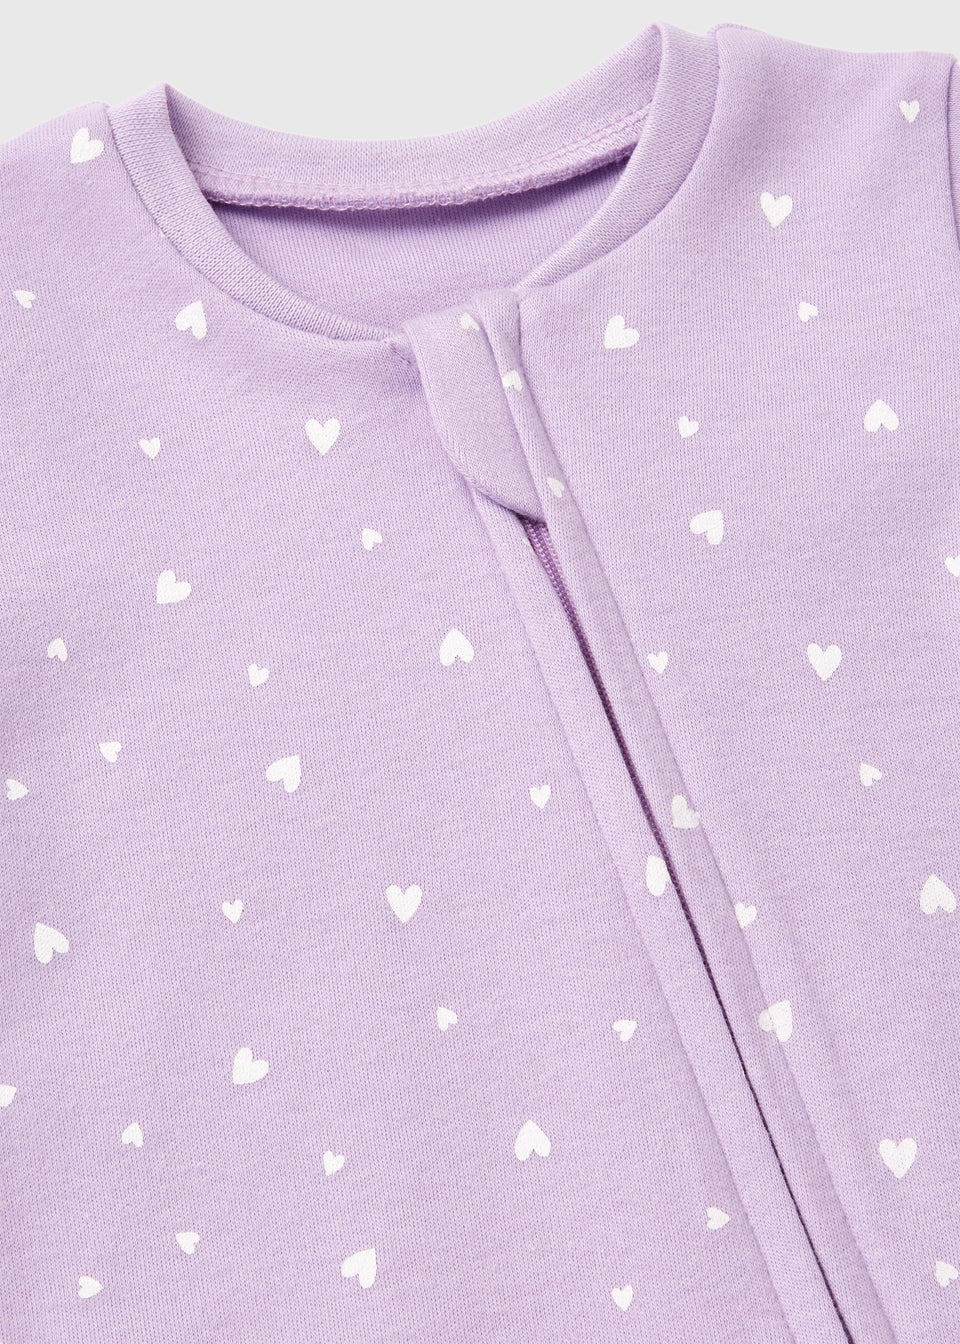 Baby Lilac Heart Print Zipped Sleepsuit (Newborn-18mths)